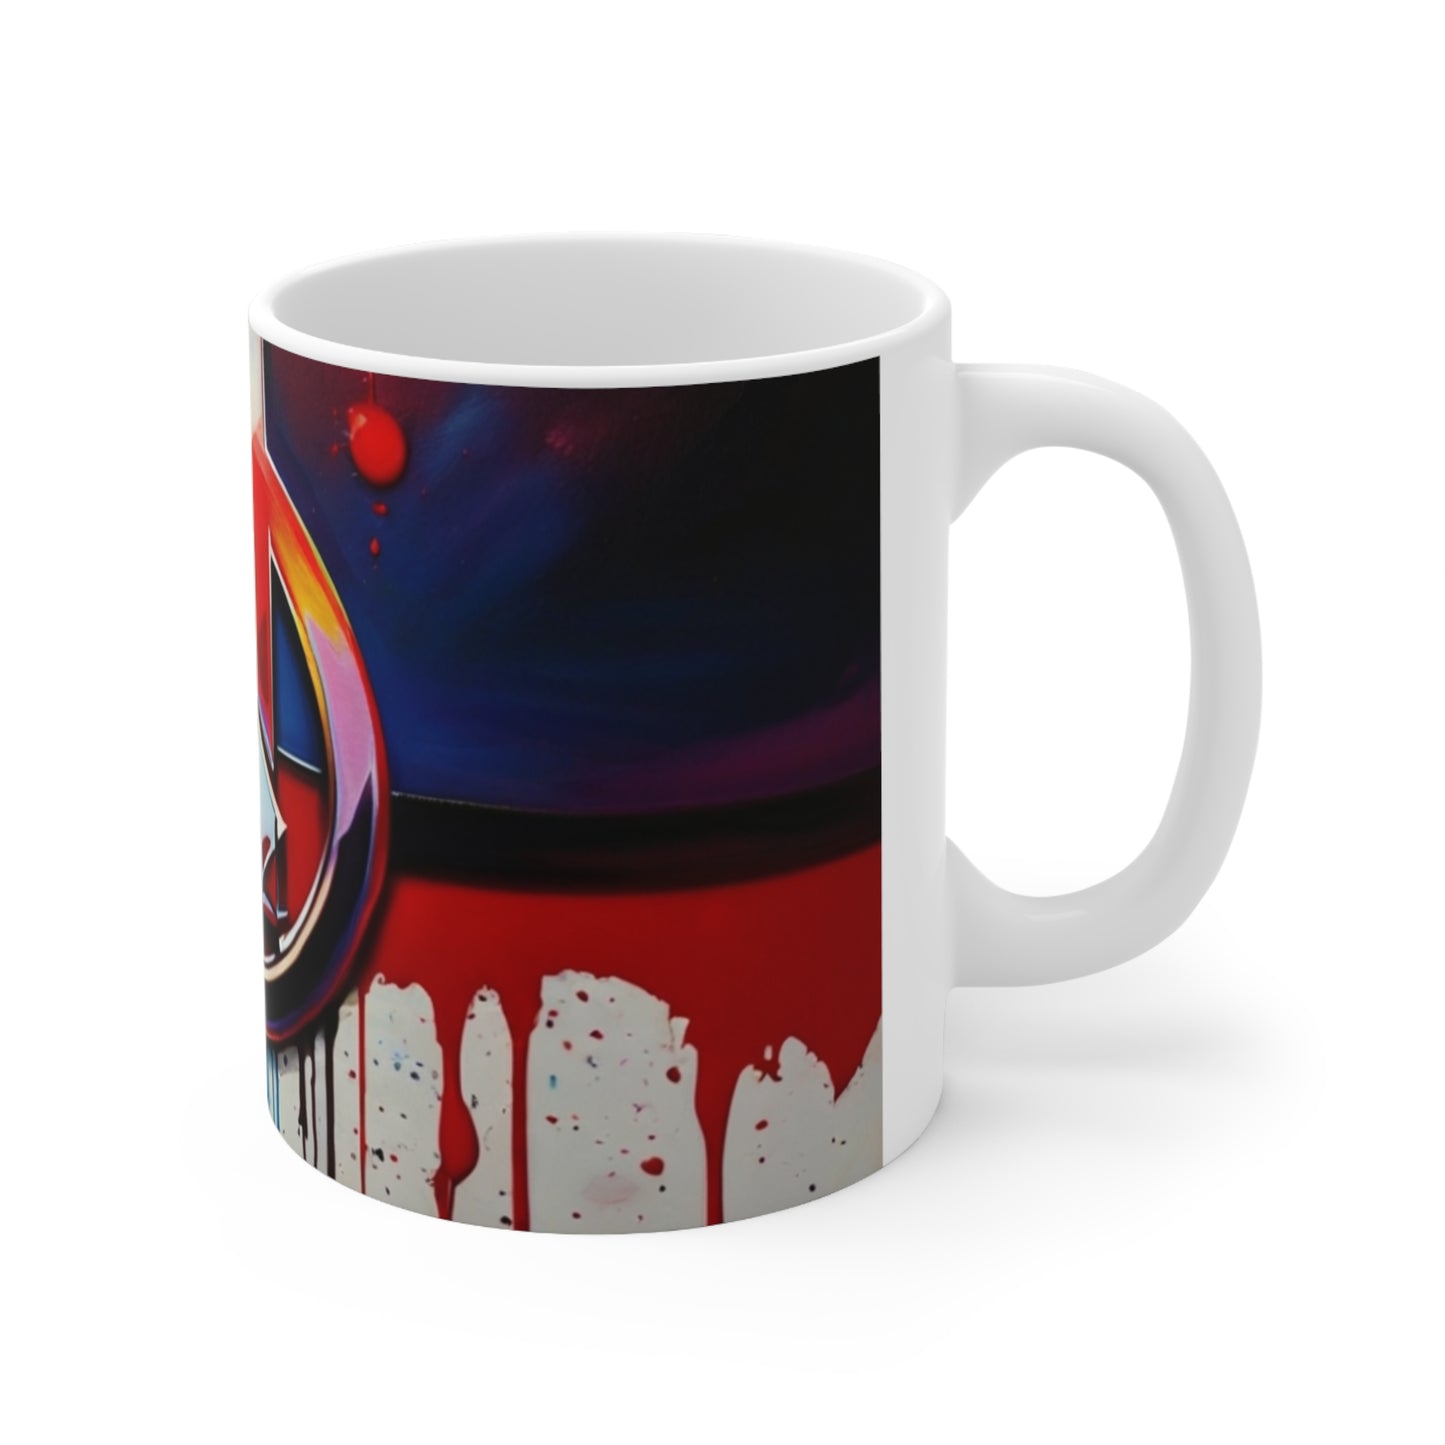 Messy Red and Blue Avengers Logo Mug - Ceramic Coffee Mug 11oz